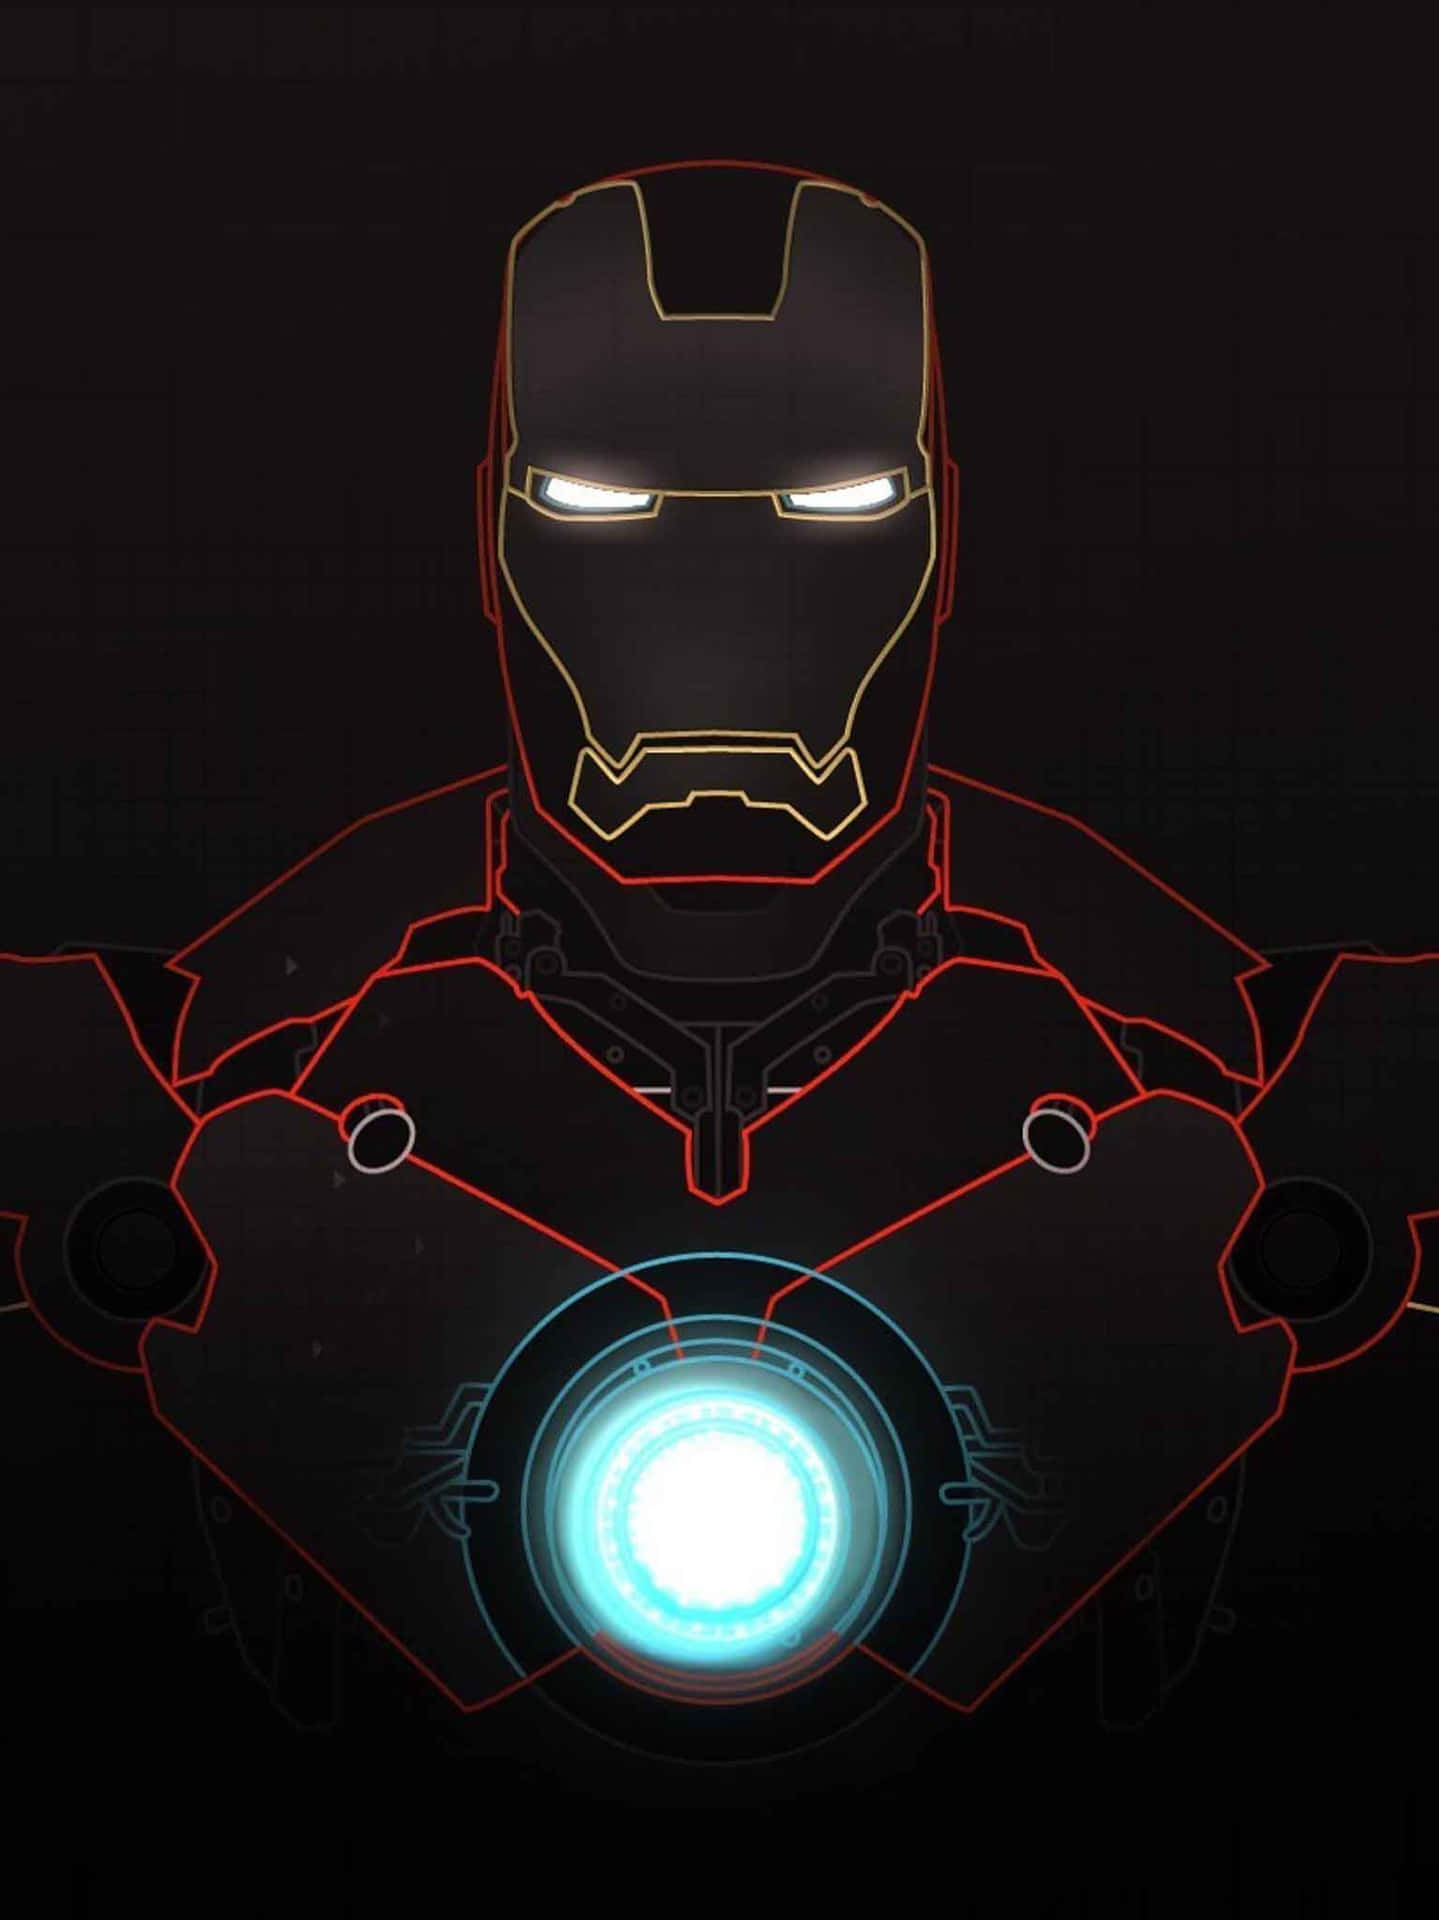 Muestratu Fanatismo Por Iron Man Luciendo Este Iphone X De Iron Man. Fondo de pantalla